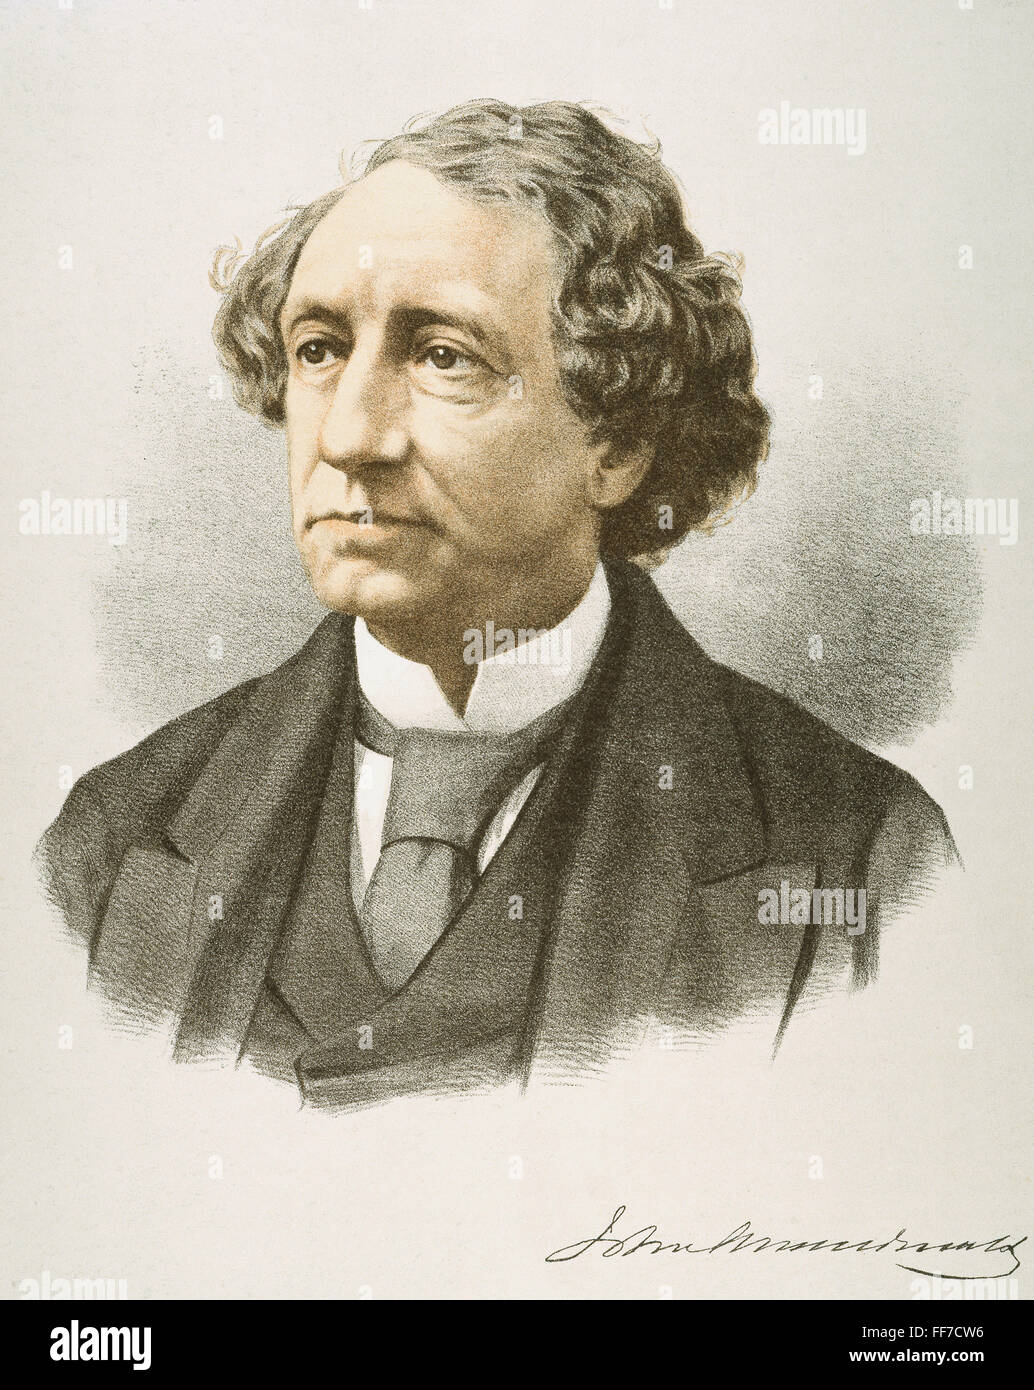 JOHN ALEXANDER MacDONALD /n(1815-1891). Kanadischer Politiker. Lithographie, 19. Jahrhundert. Stockfoto